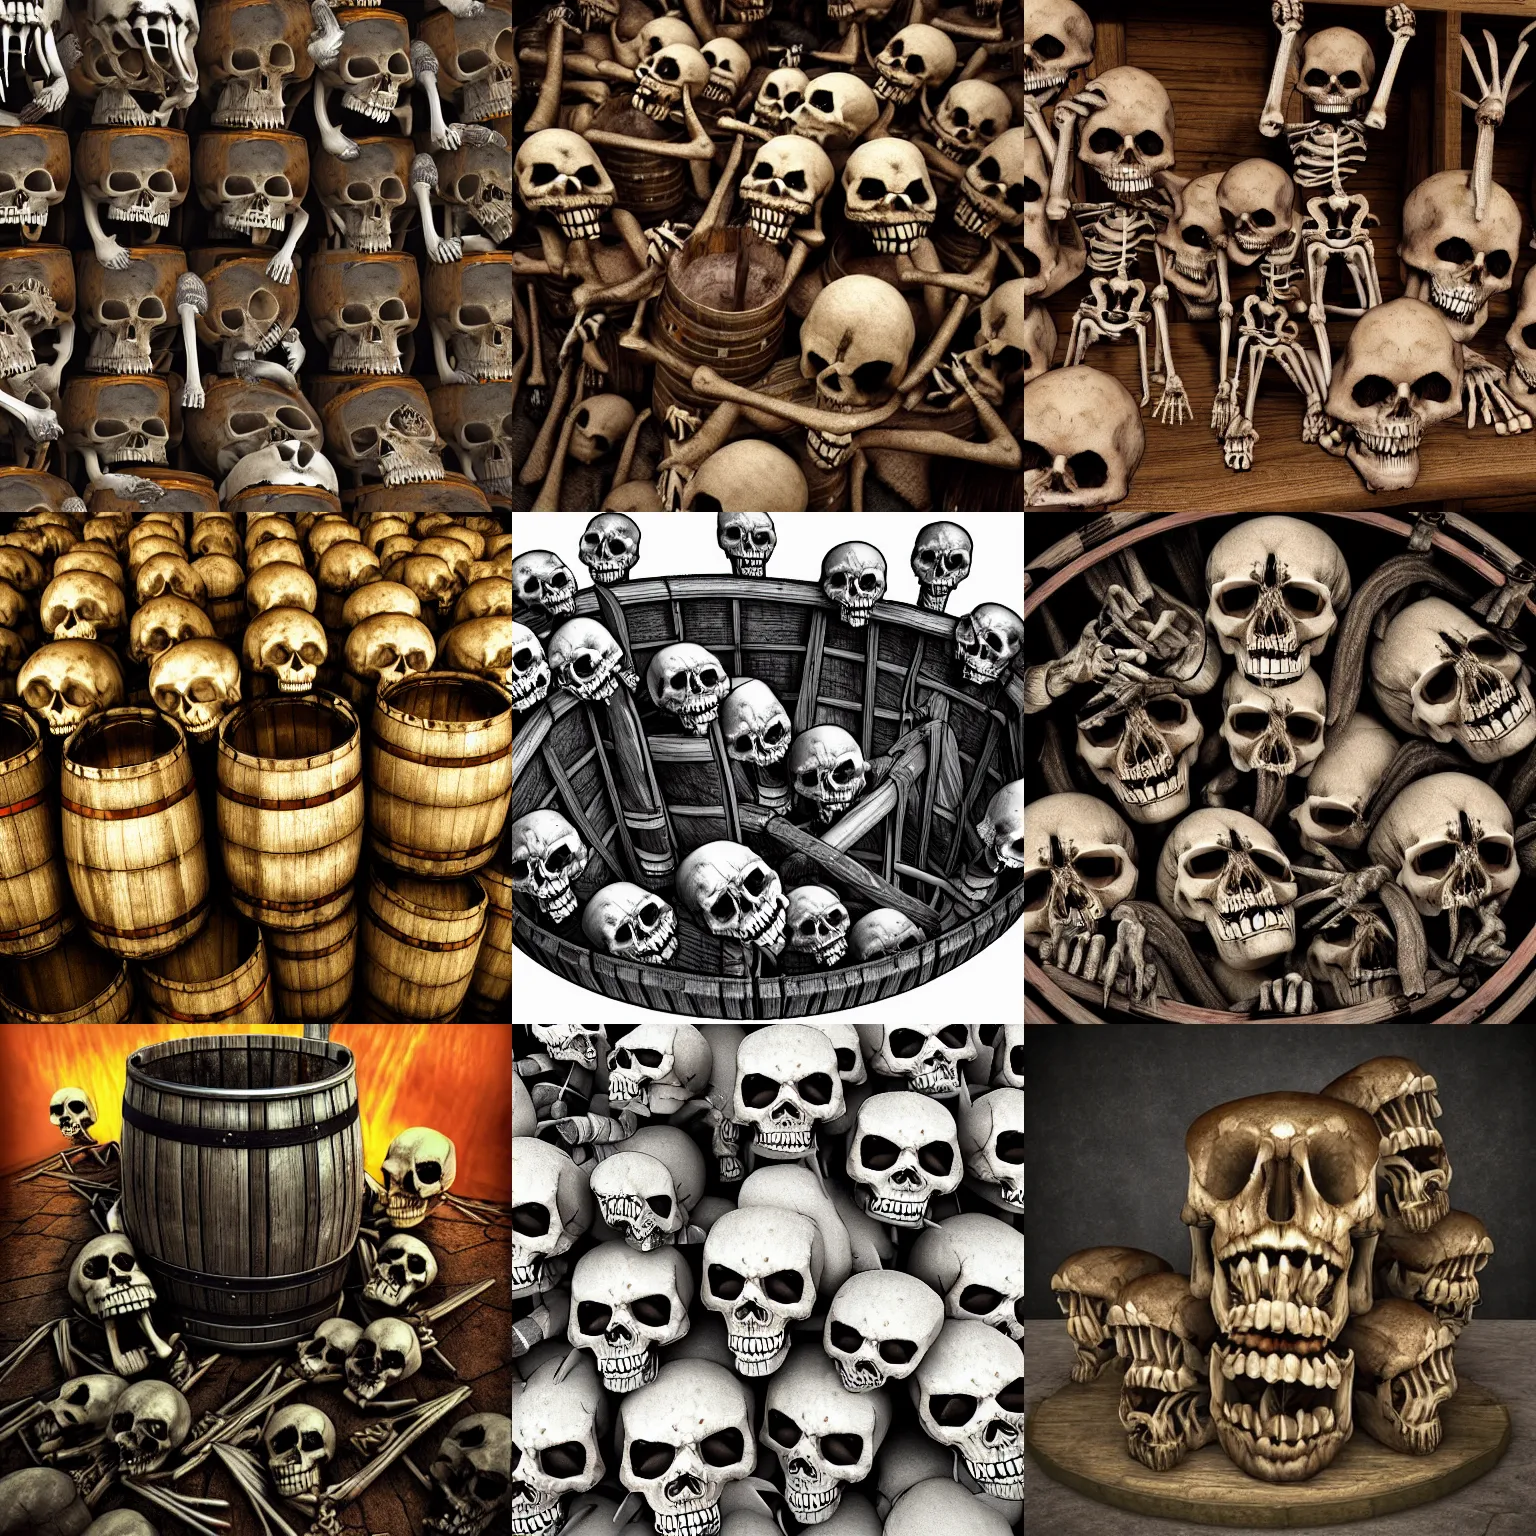 Prompt: barrel of skeletons, horror scene, detailed, photorealistic